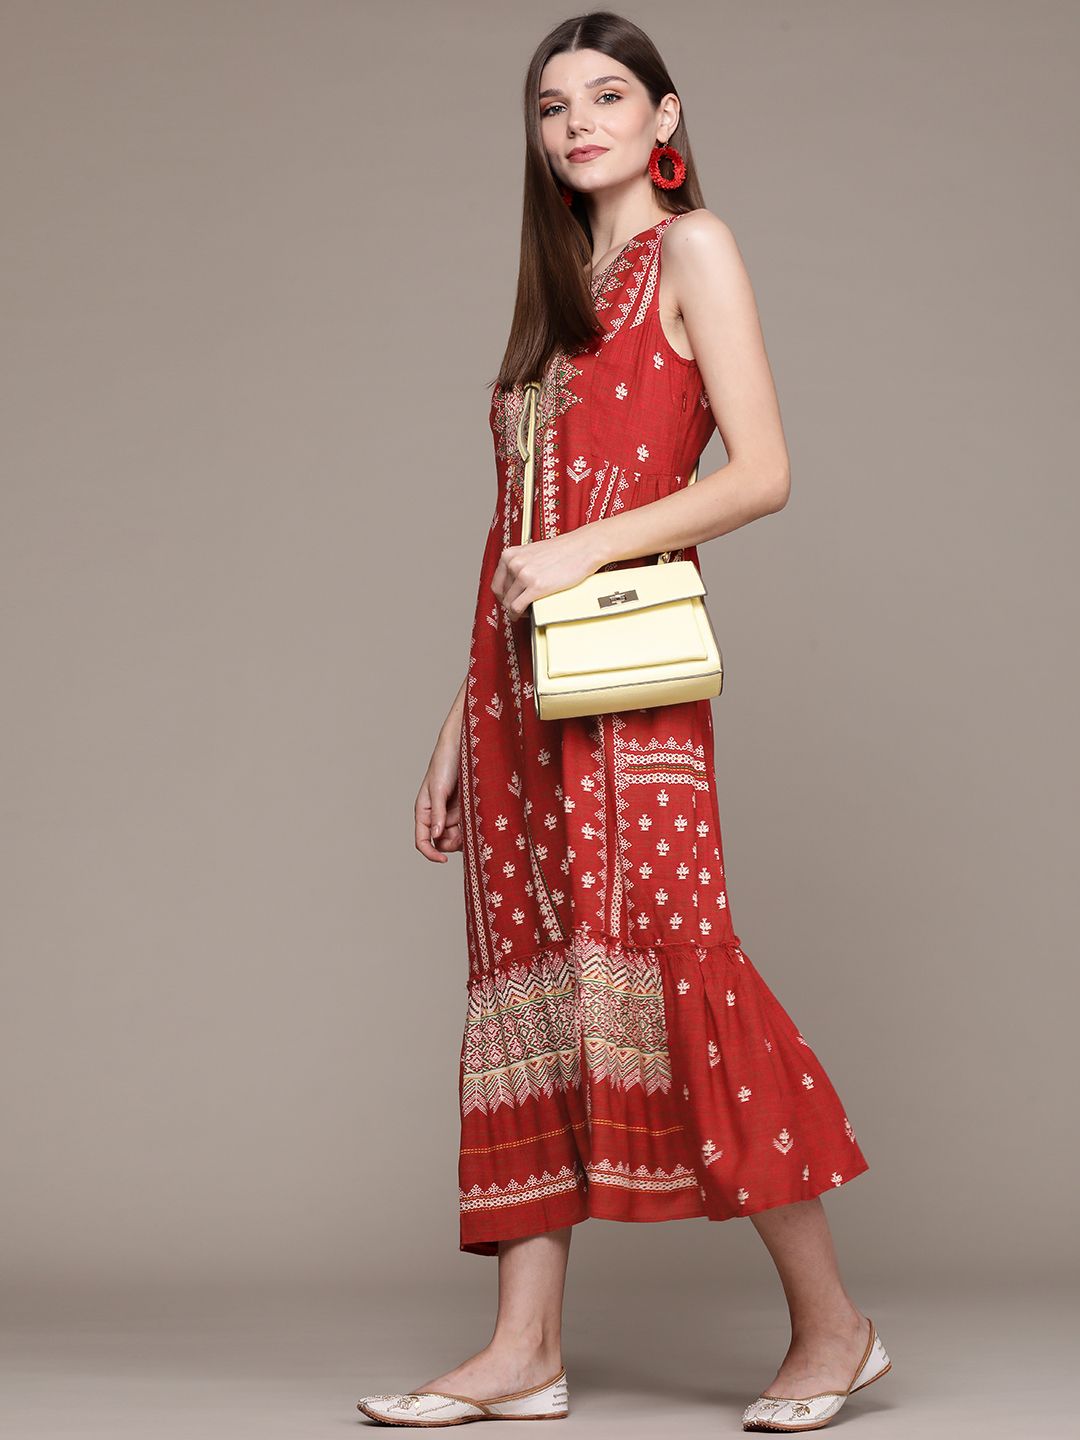 aarke Ritu Kumar Women Red & Off-White Ethnic Motifs Keyhole Neck A-Line Midi Dress Price in India